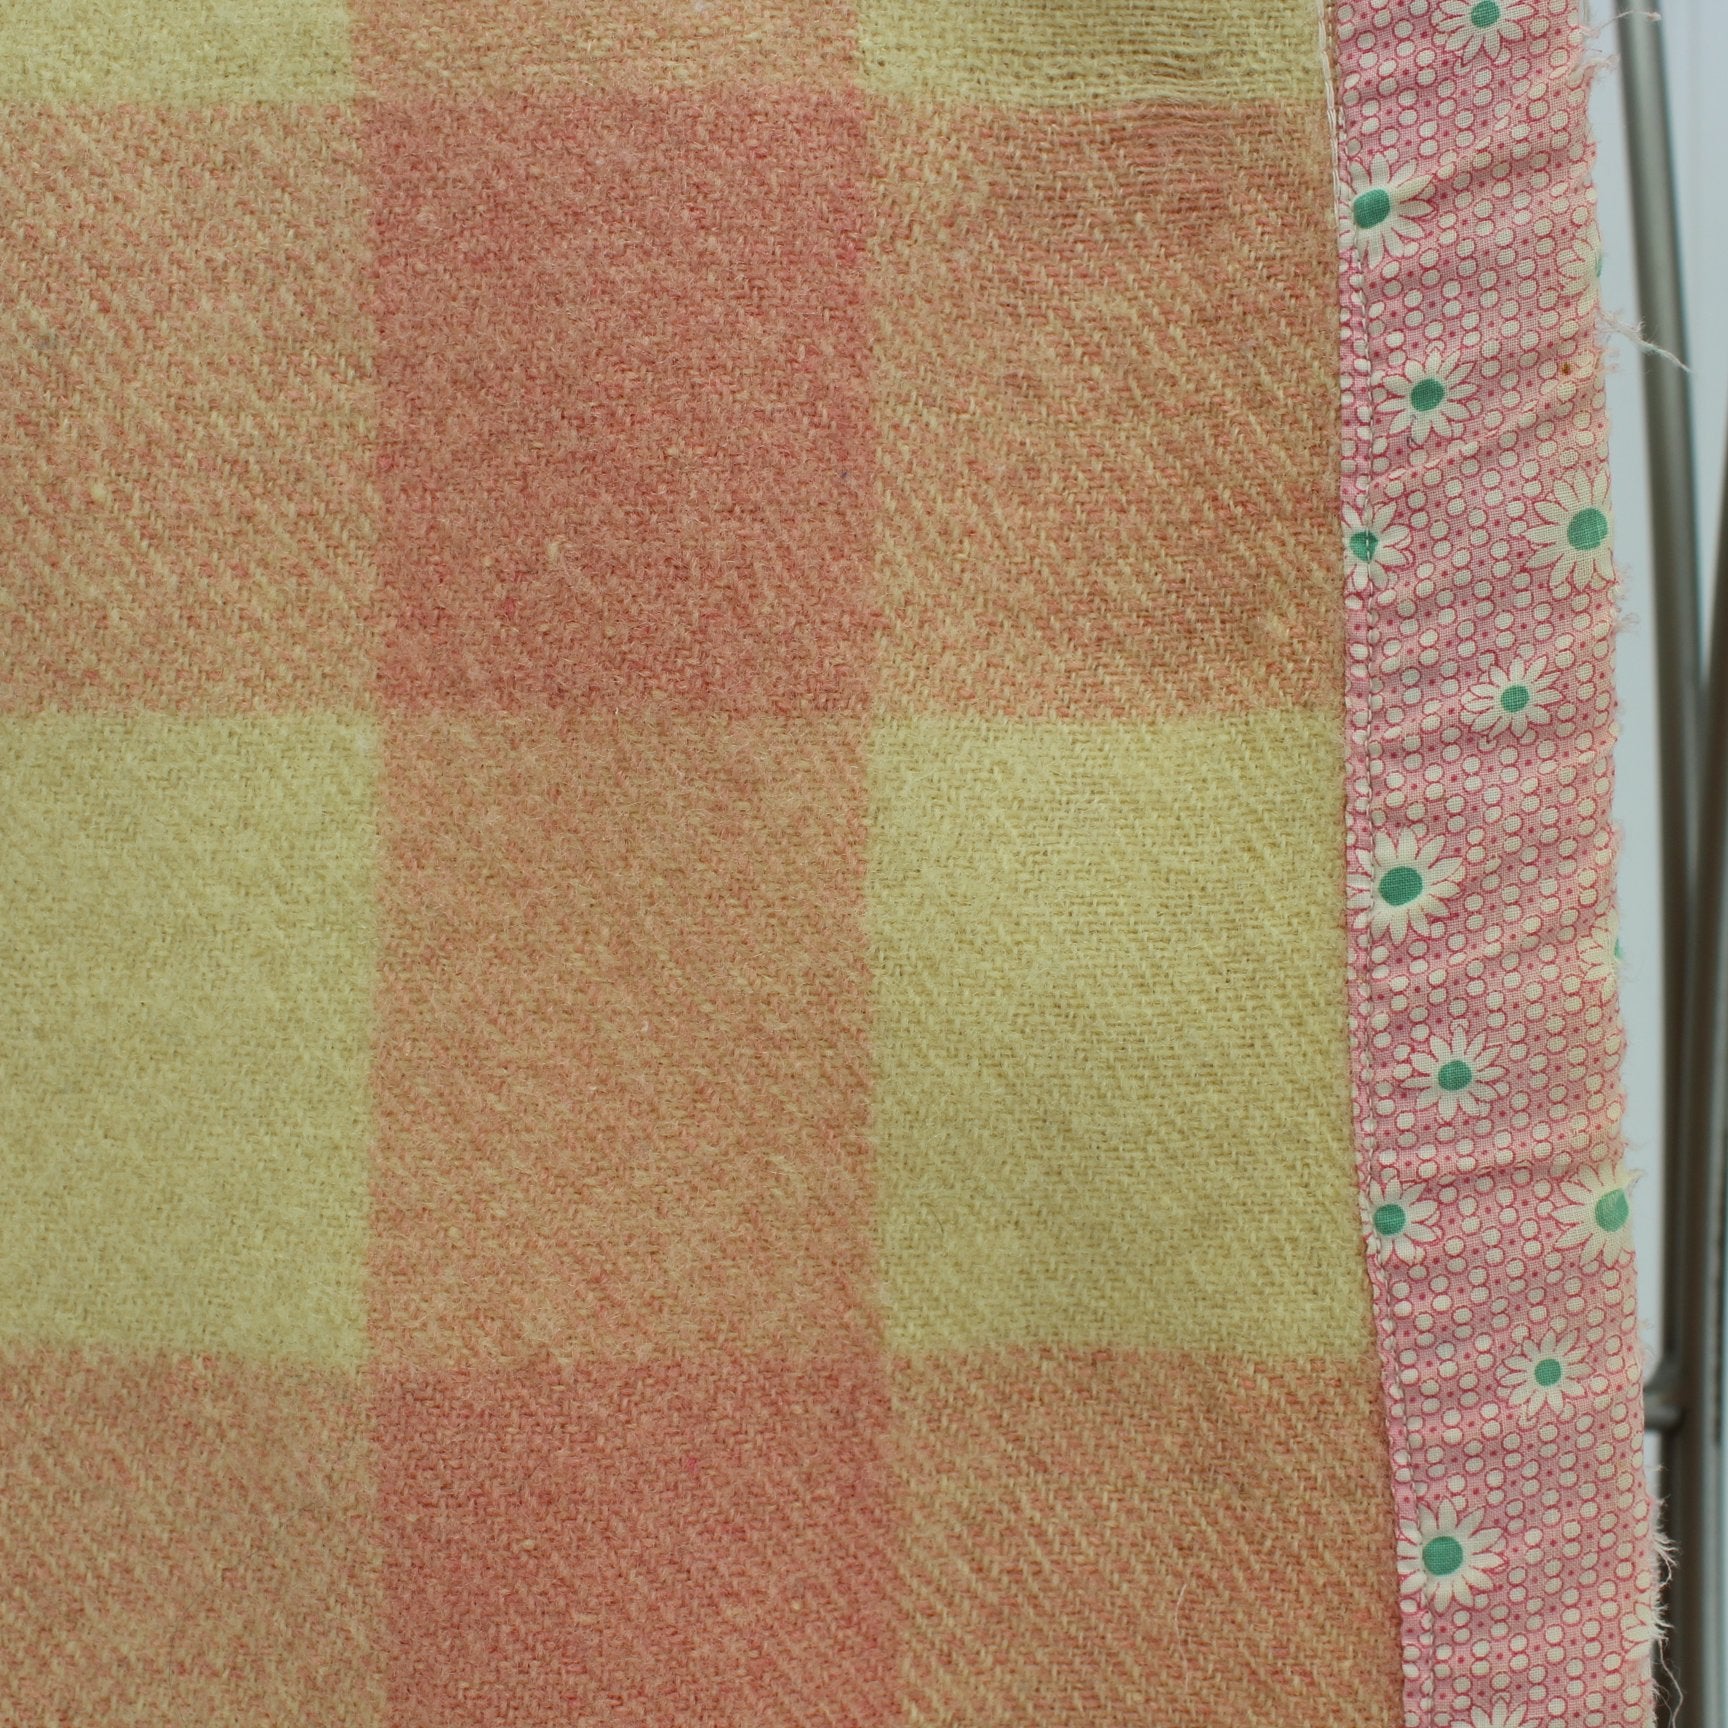 Small Wool Blanket Cream Pink Big Checks Late 1940s Use or Cutter DIY very nice wool fabric